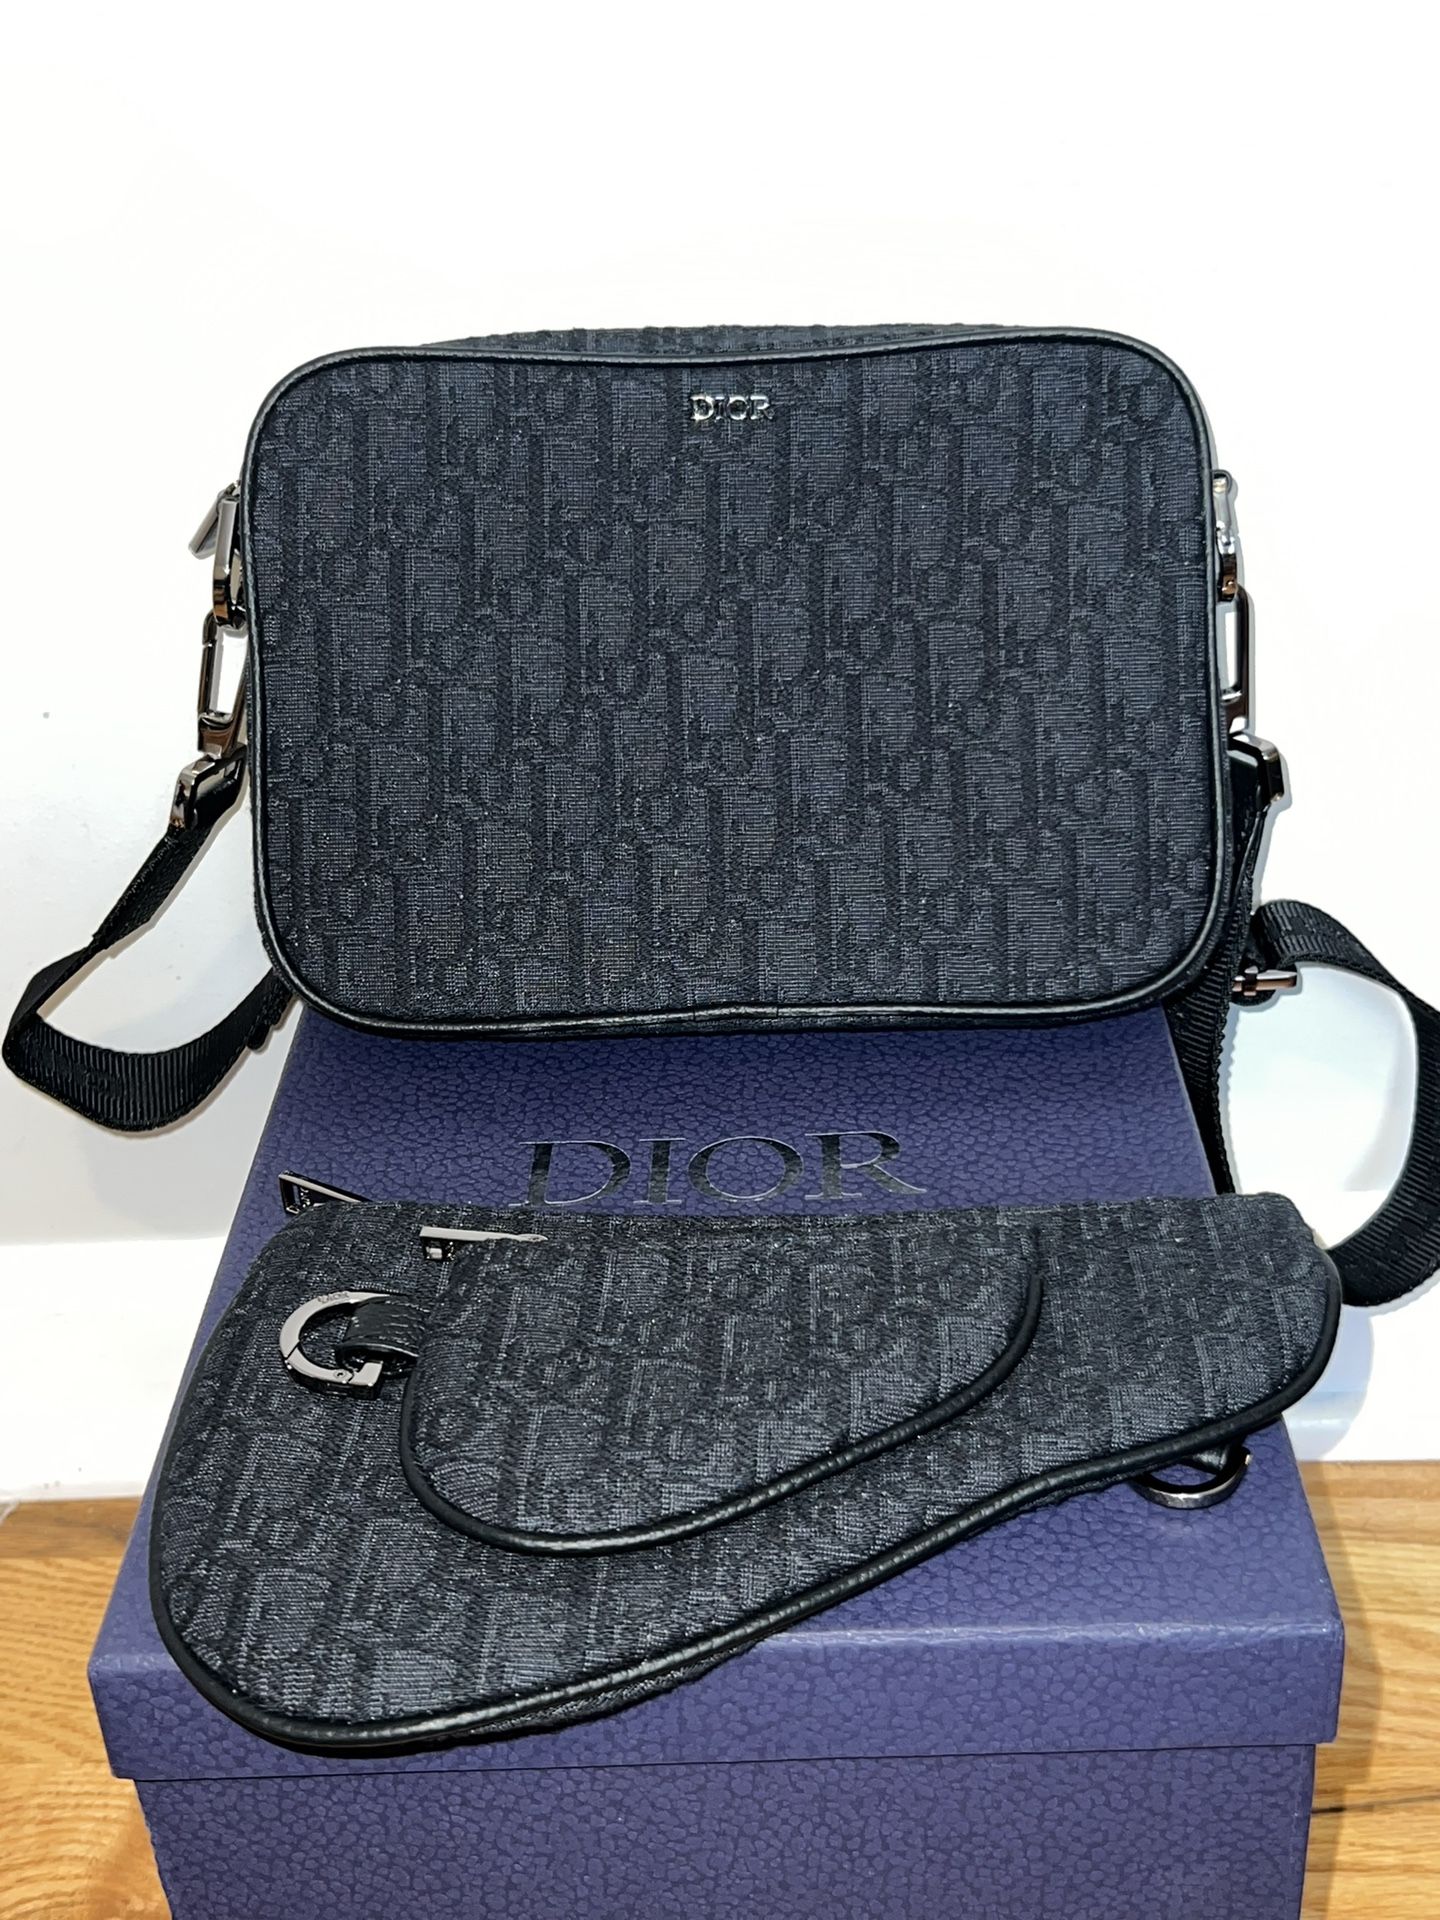 Dior Messenger Bag Black Brand New Jordan 